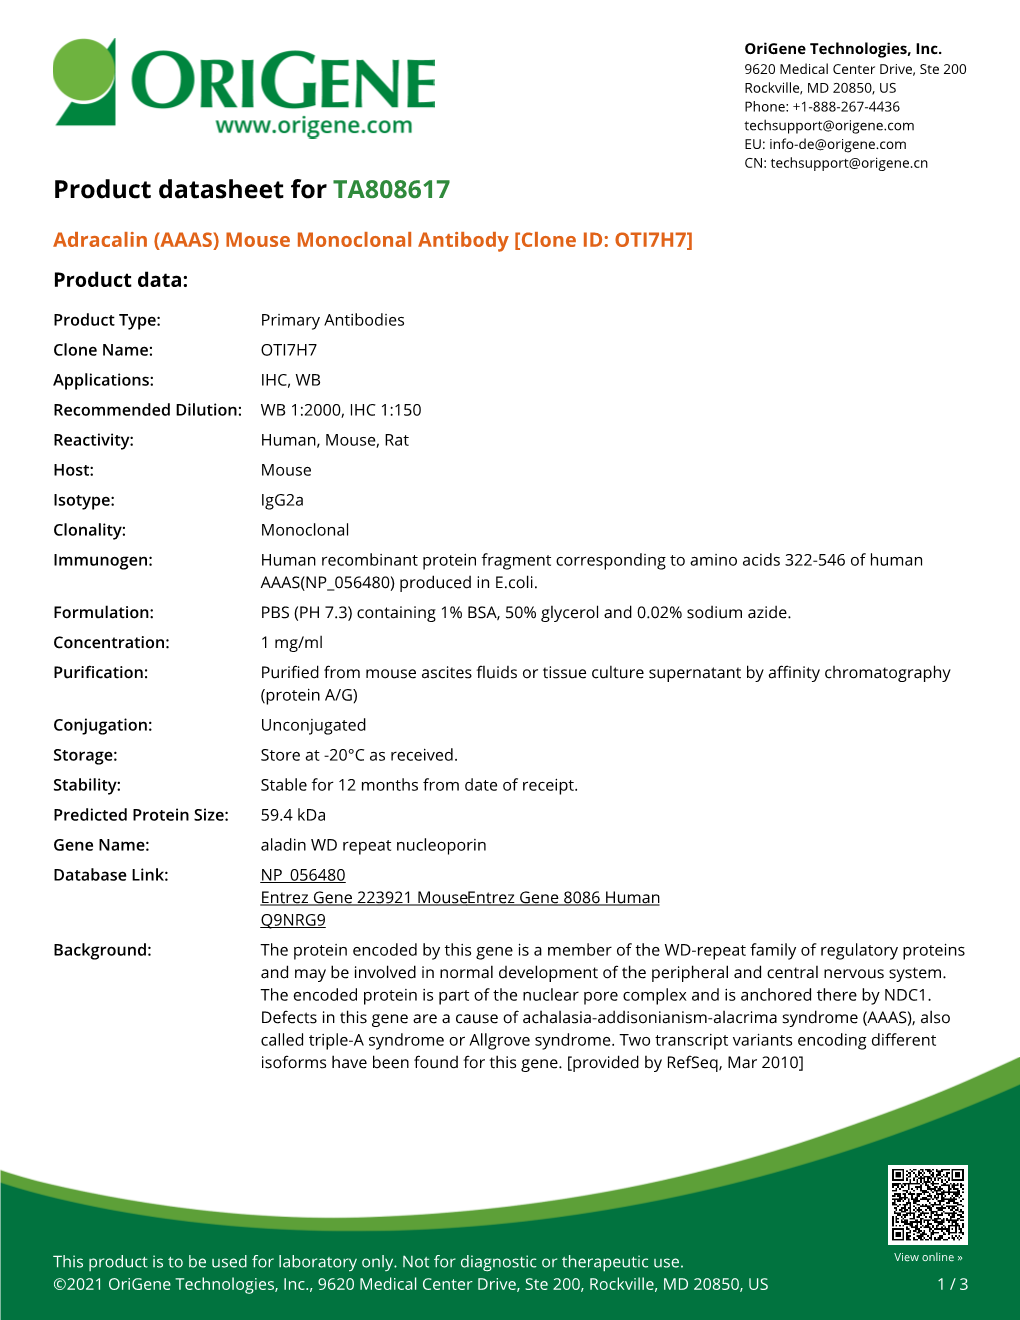 Adracalin (AAAS) Mouse Monoclonal Antibody [Clone ID: OTI7H7] – TA808617 | Origene